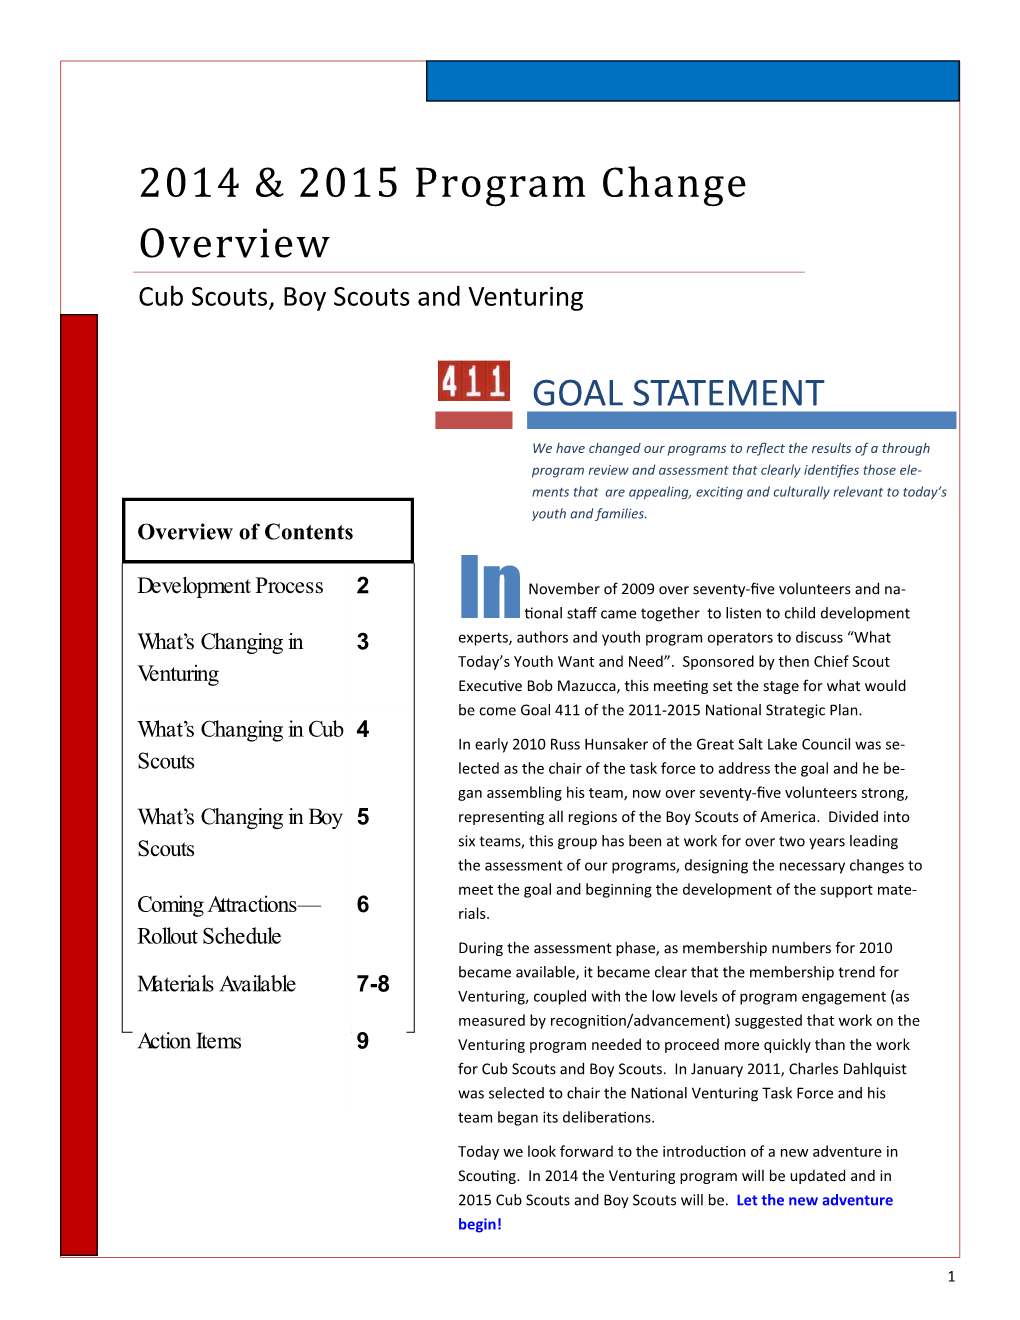 2015 Program Change Overview V7.Pub